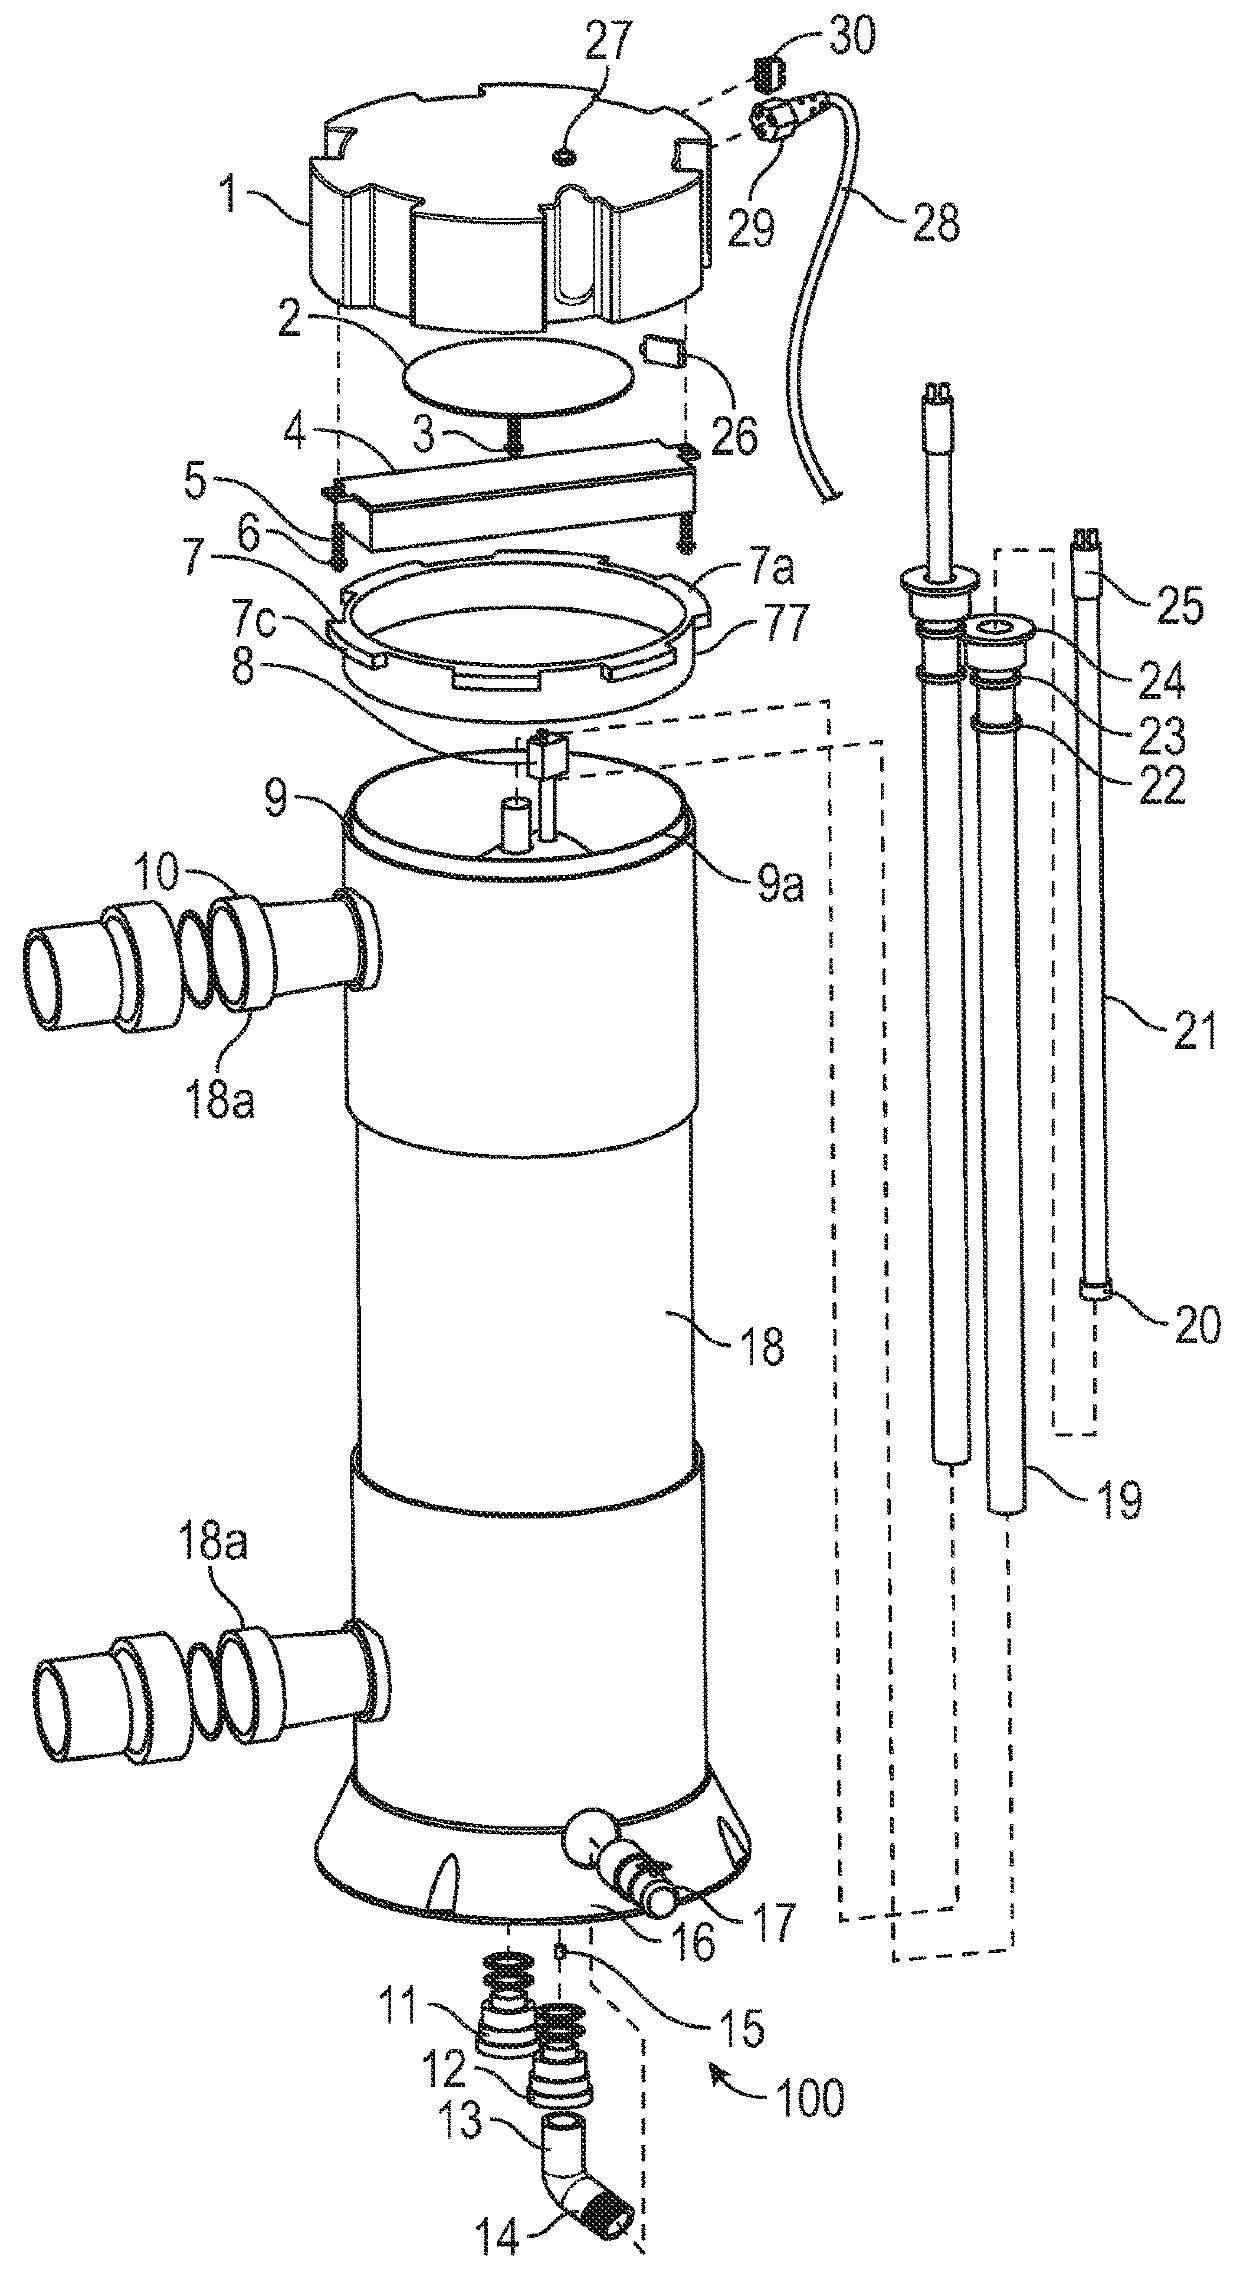 Illuminated ventilation ring for a uv-light water sanitizer